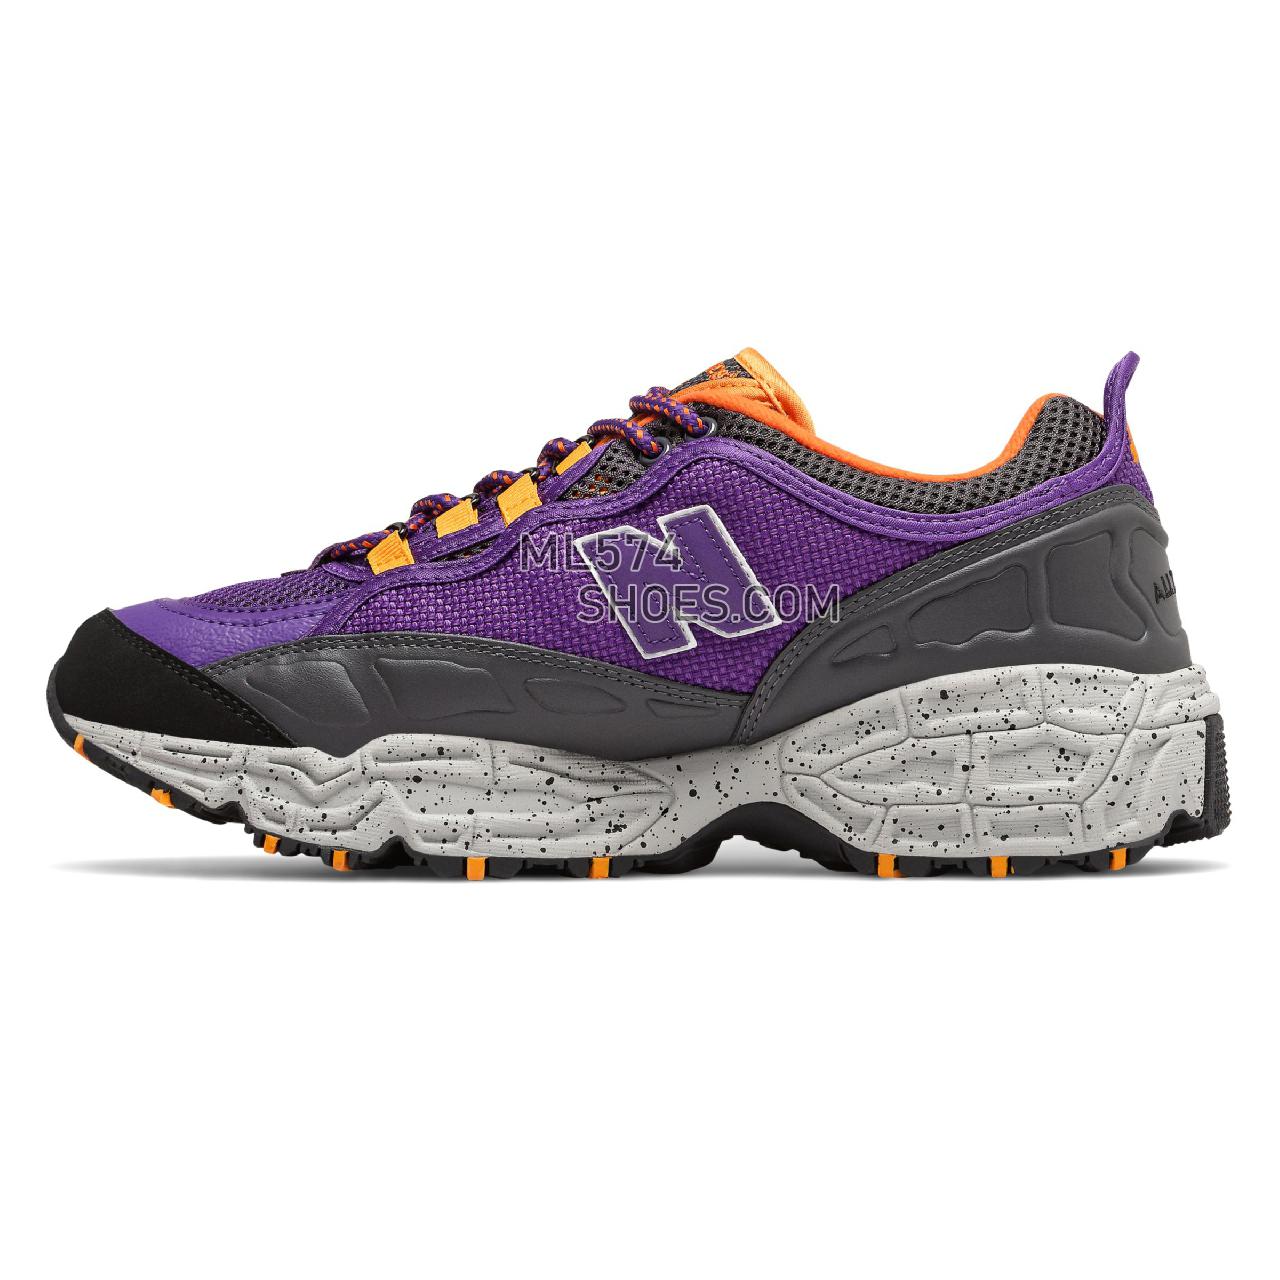 New Balance 801 - Men's Classic Sneakers - Prism Purple with Black and Orange - ML801NEA